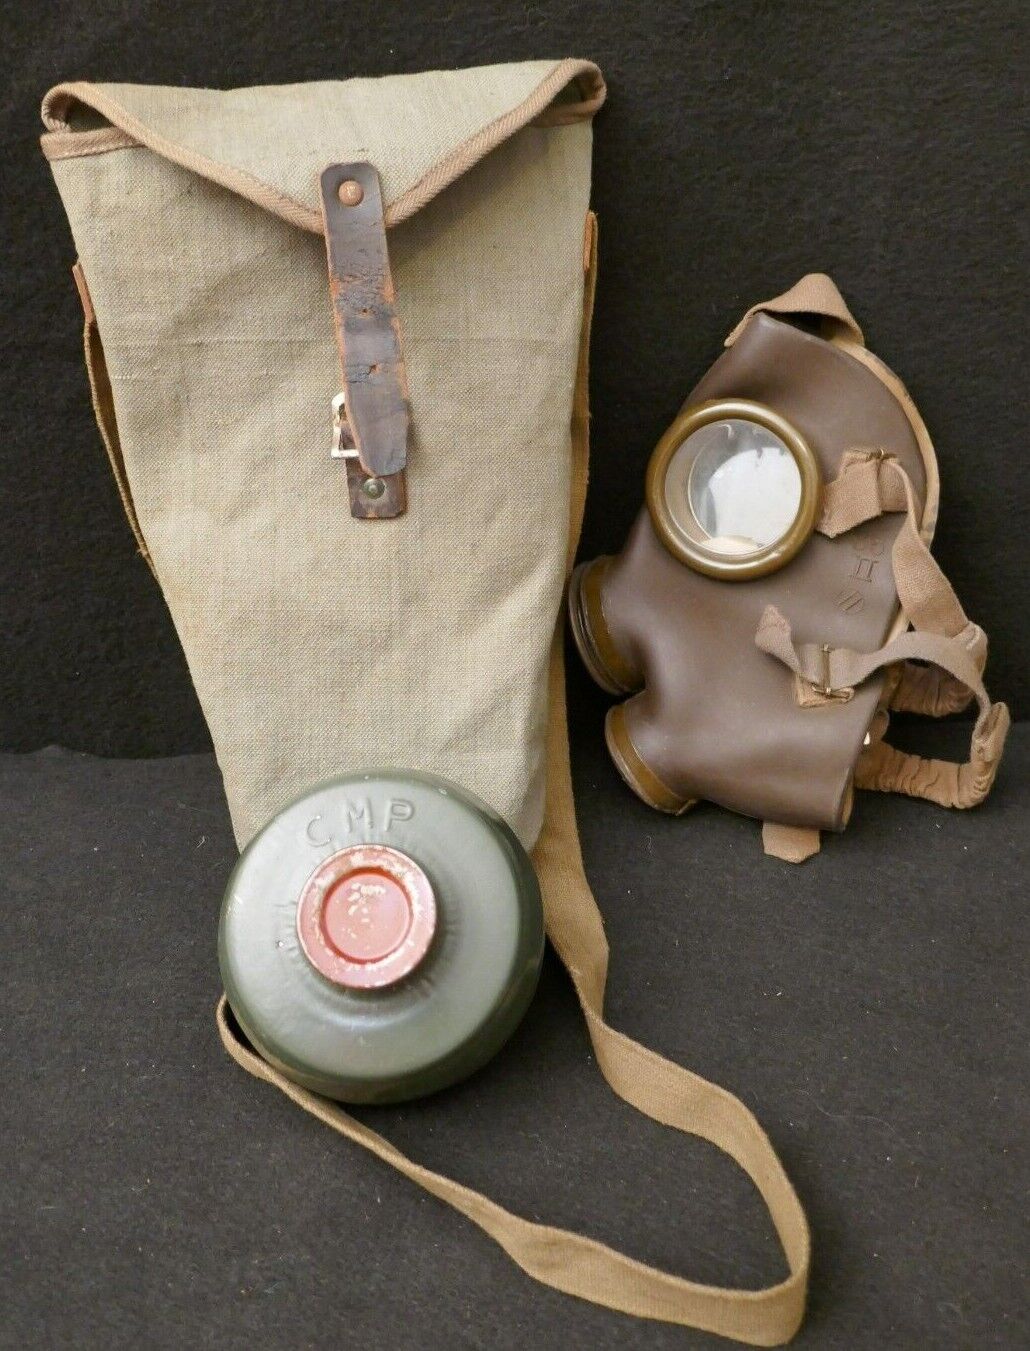 WWII Spanish Civil War Gas Mask Franco 1935 Condor Legion & Carrying Case, Rare